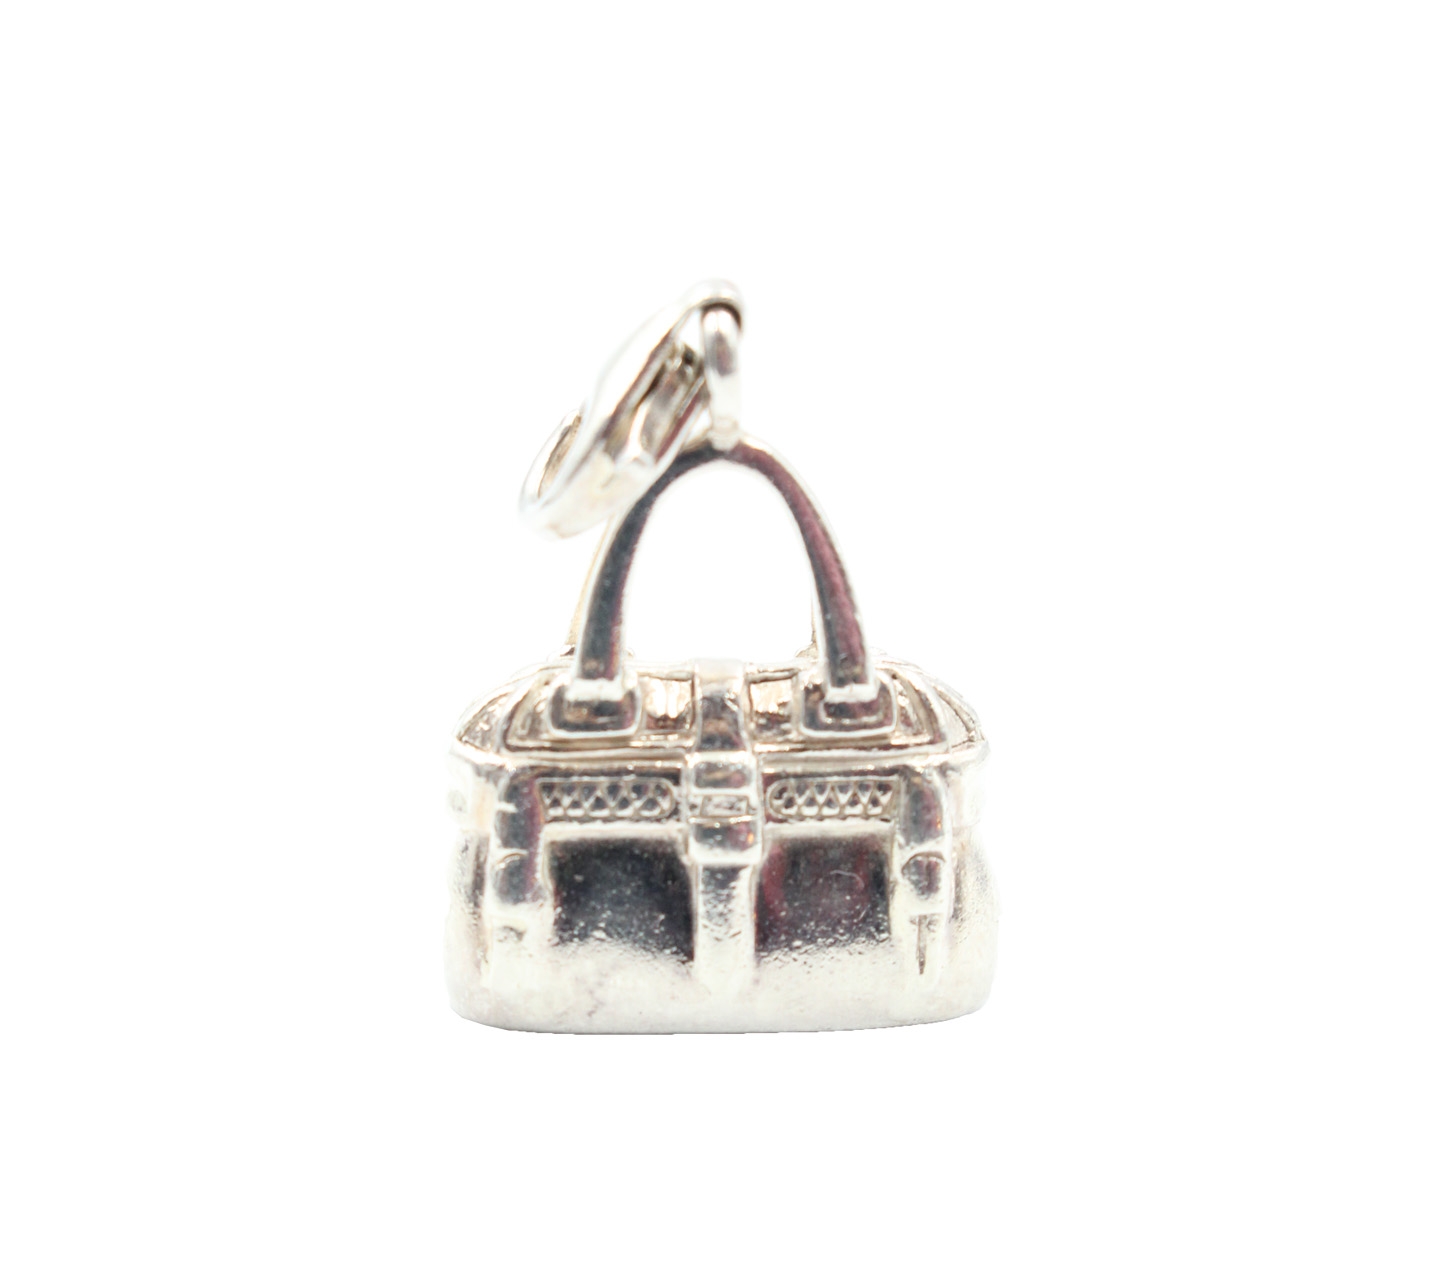 Thomas Sabo Silver Bag Charm Jewelry